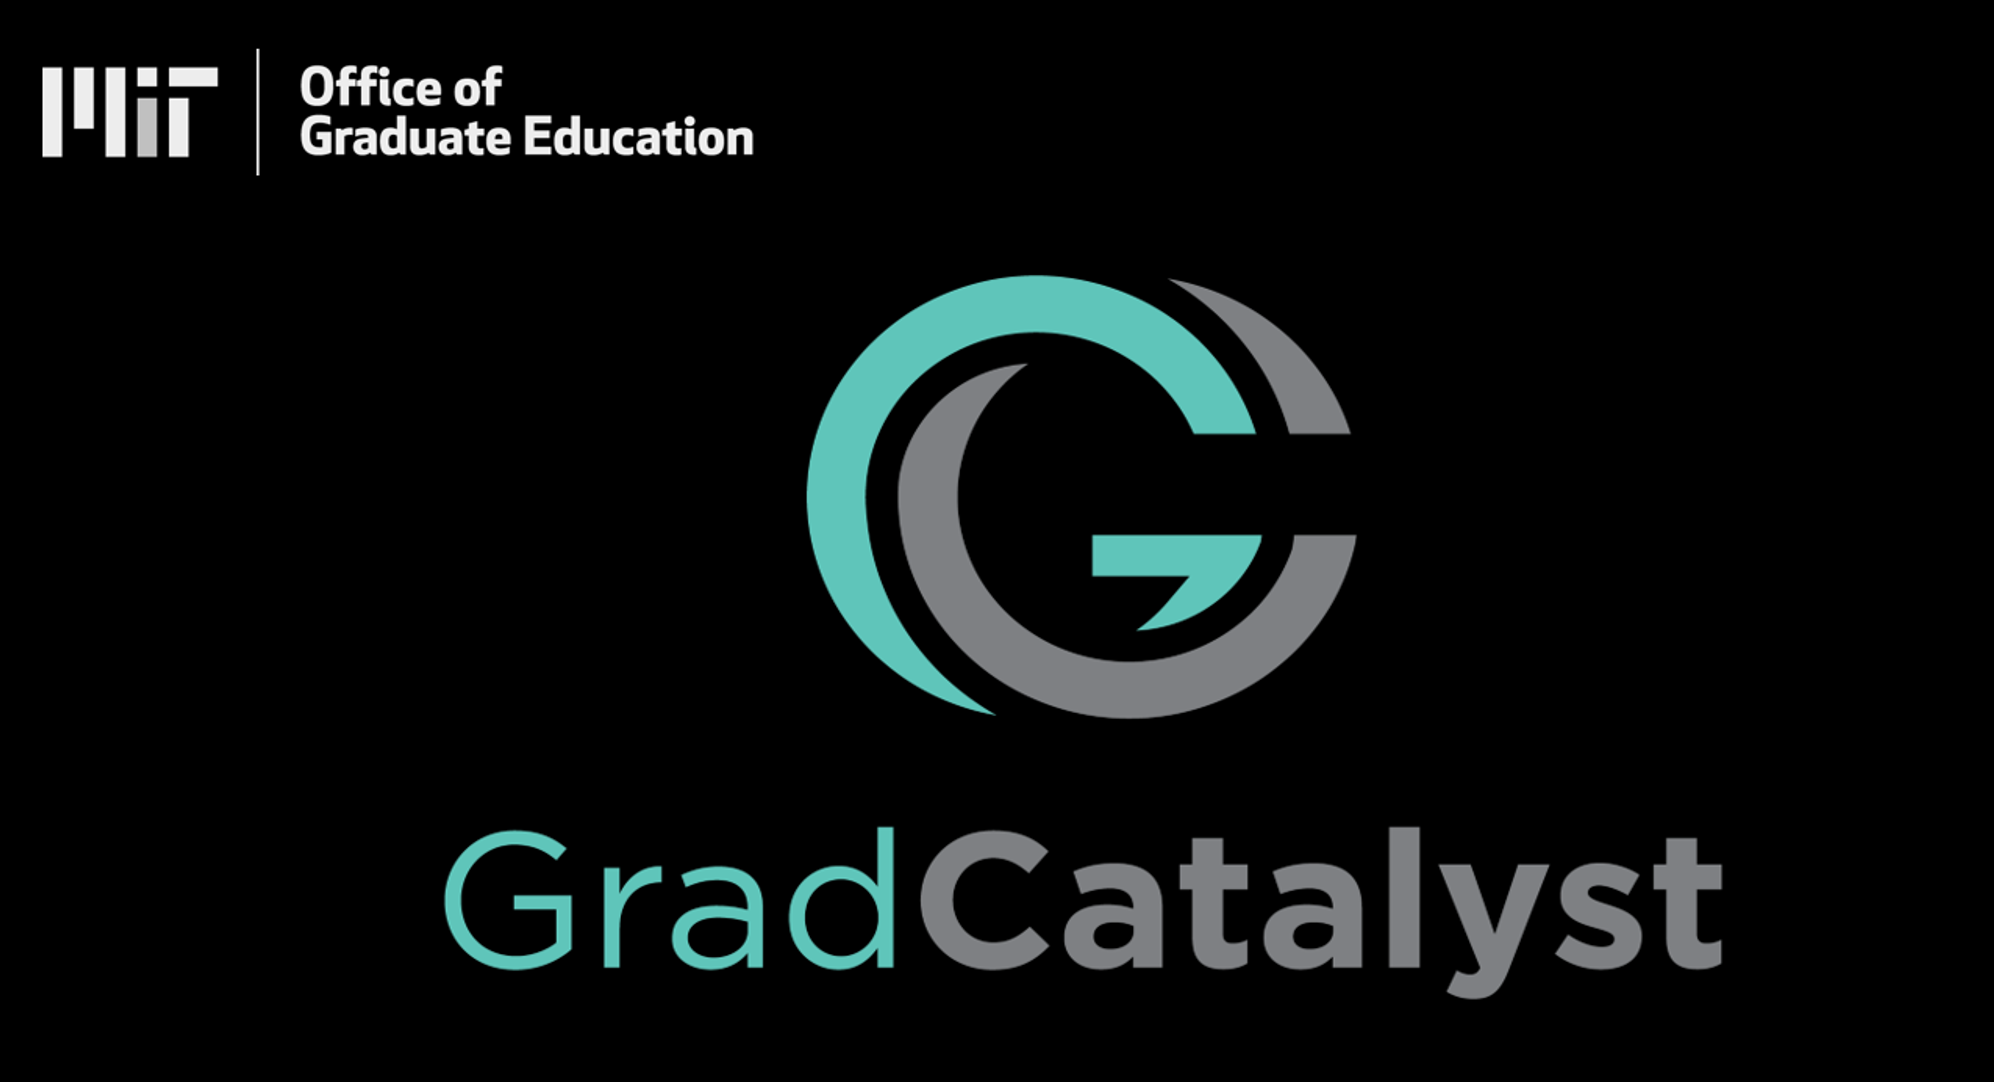 MIT Office of Graduate Education: Grad Catalyst